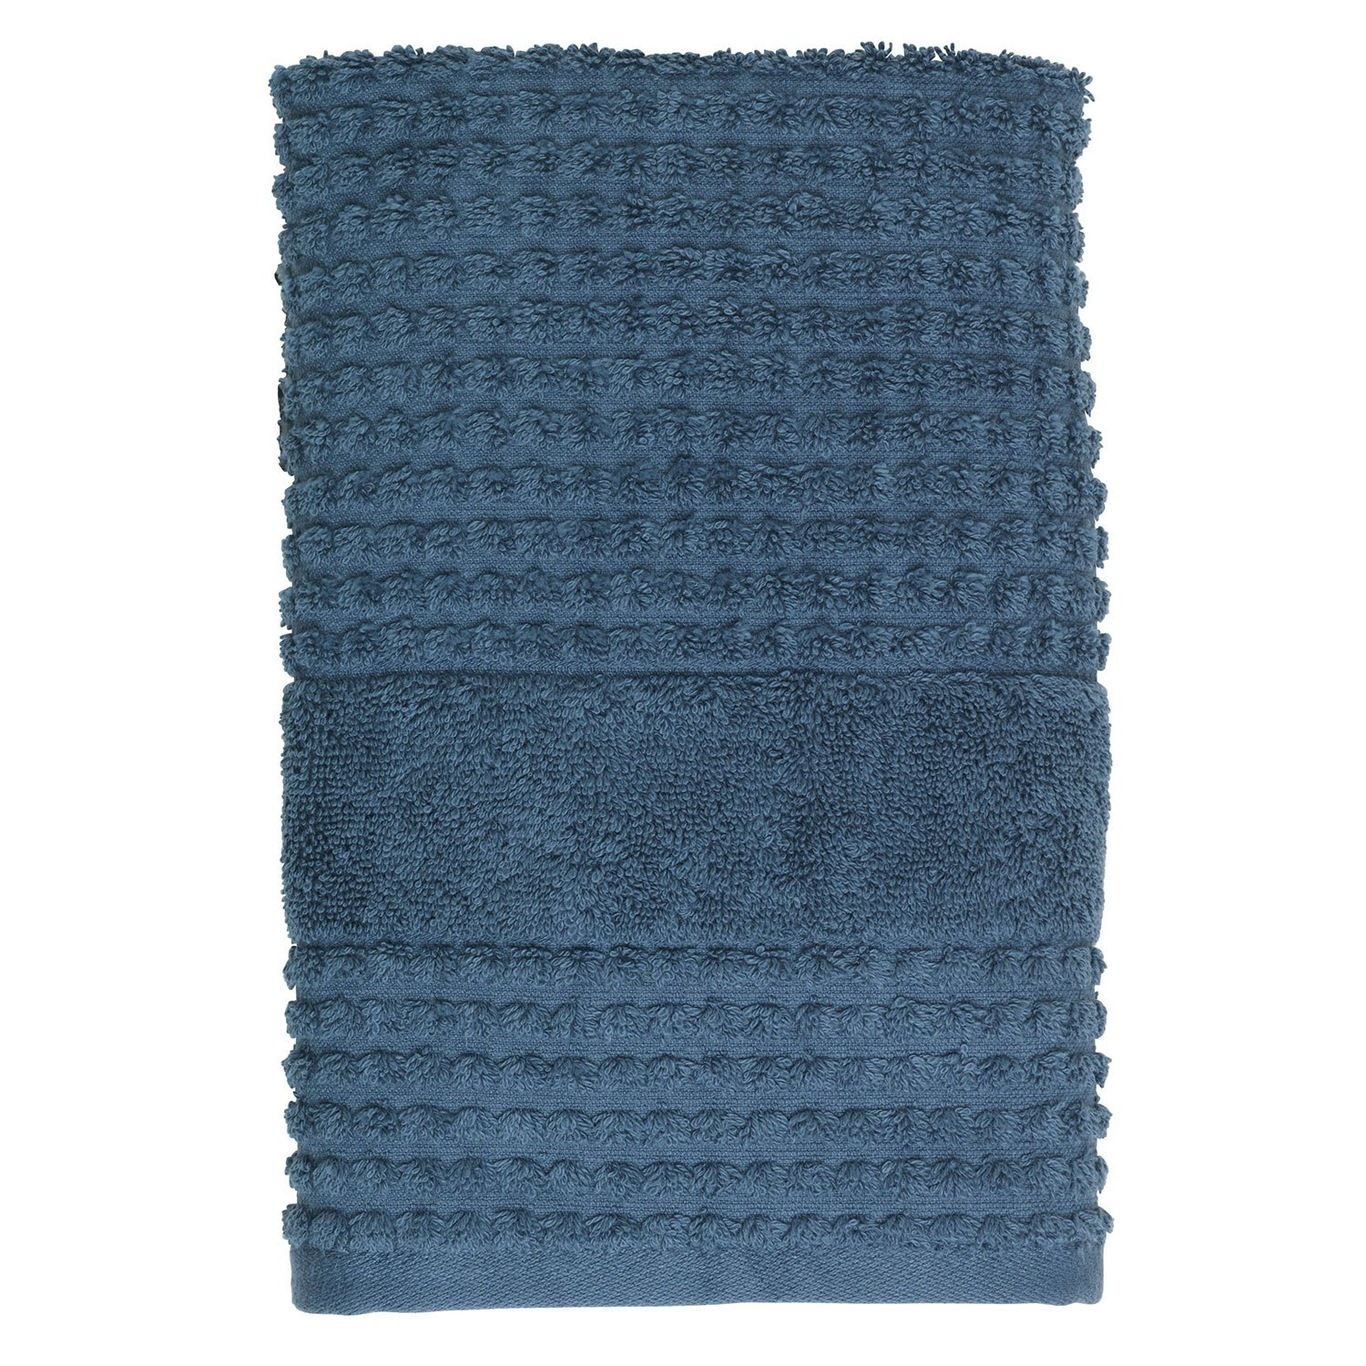 Check Håndklæde 50x100 cm, Mørkeblåt